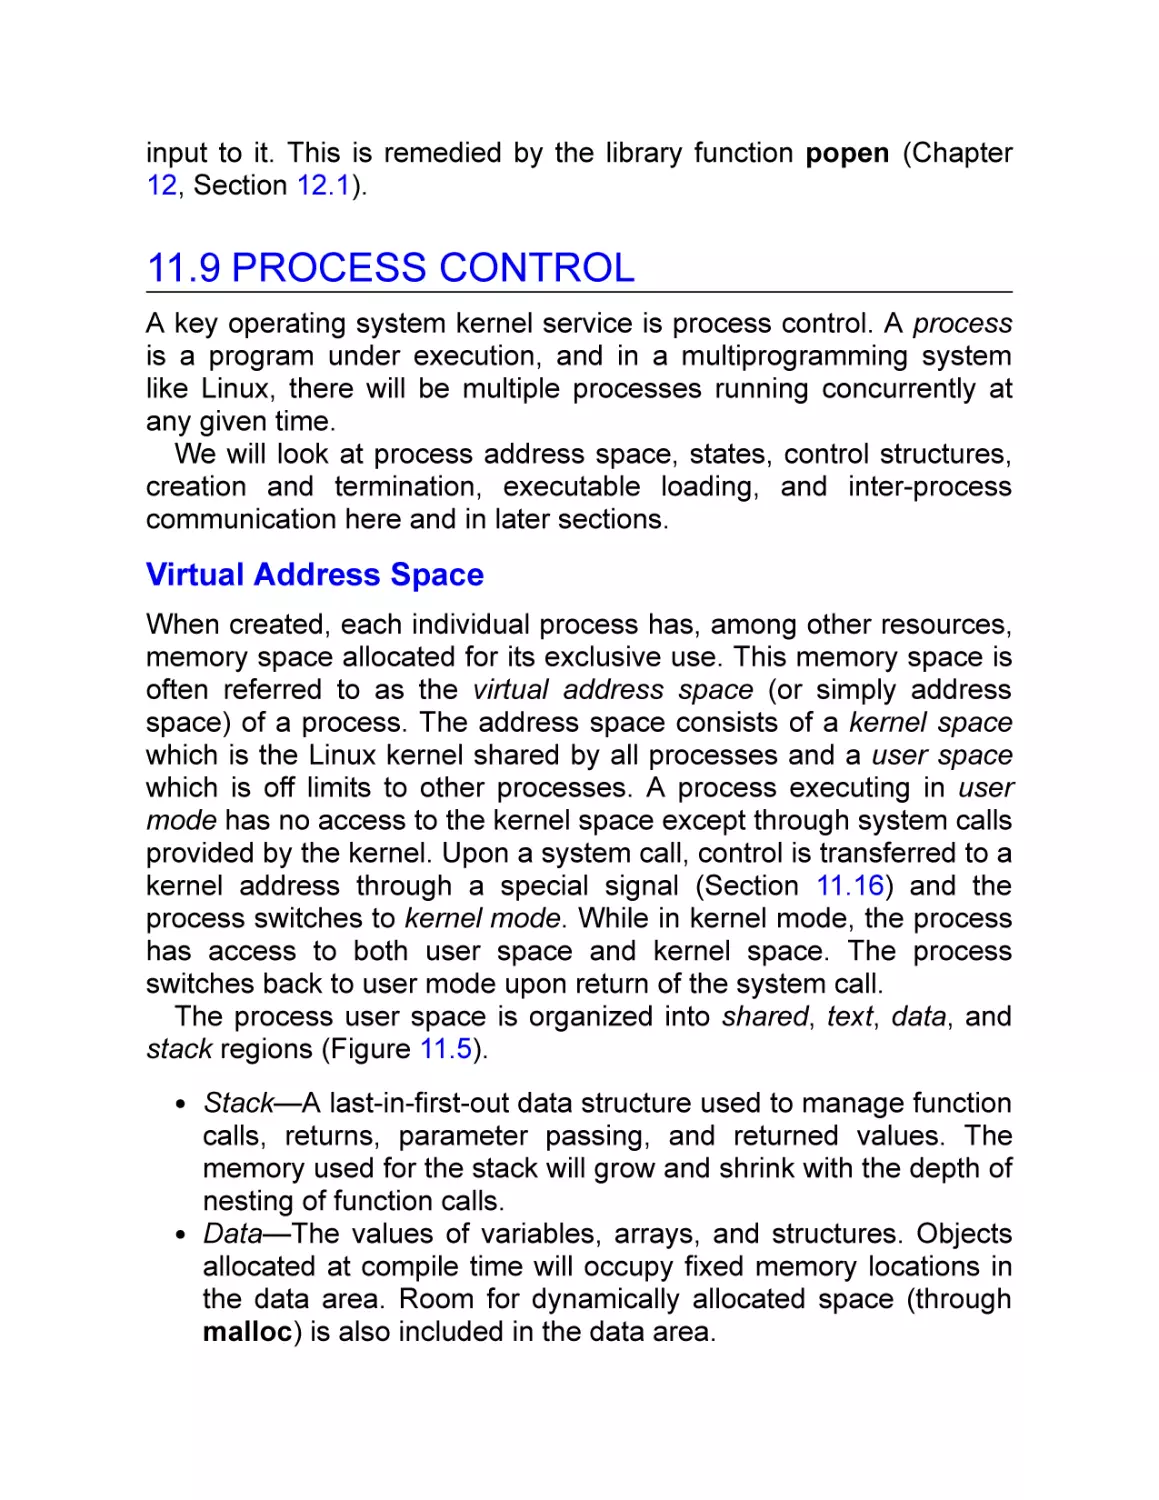 11.9 Process Control
Virtual Address Space